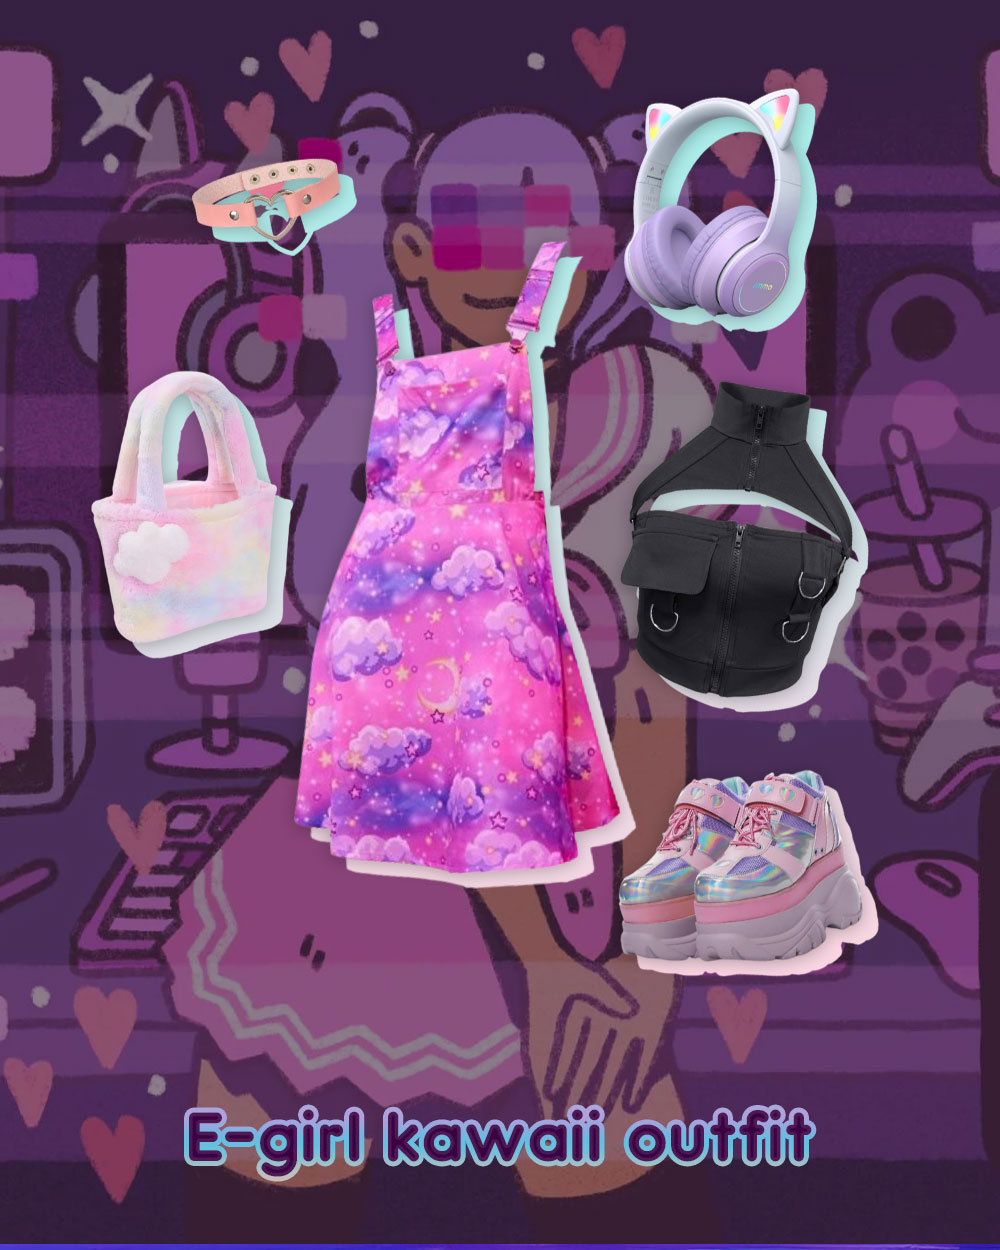 kawaii egirl outfit inspirations - chocker, cat ears headphones, handbag, jumpsuit mini dress, cargo top, platform shoes